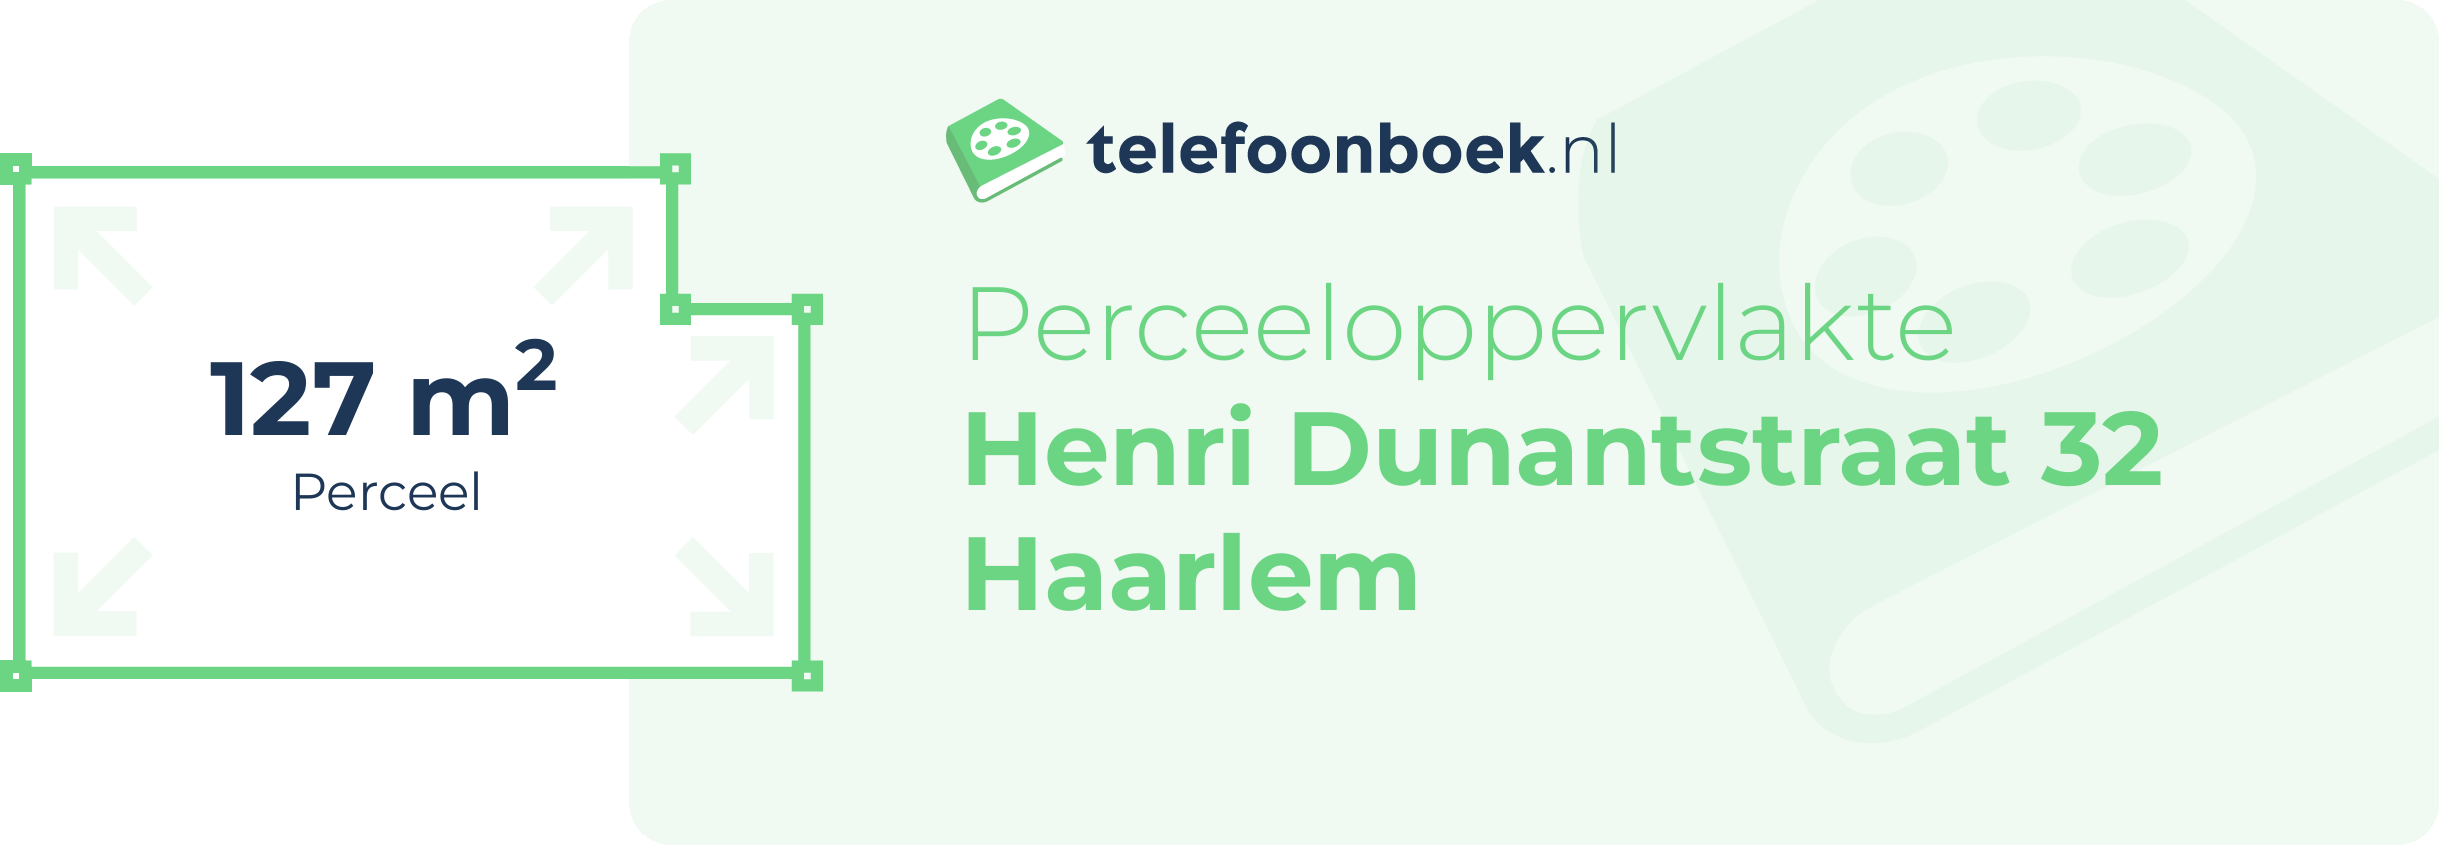 Perceeloppervlakte Henri Dunantstraat 32 Haarlem